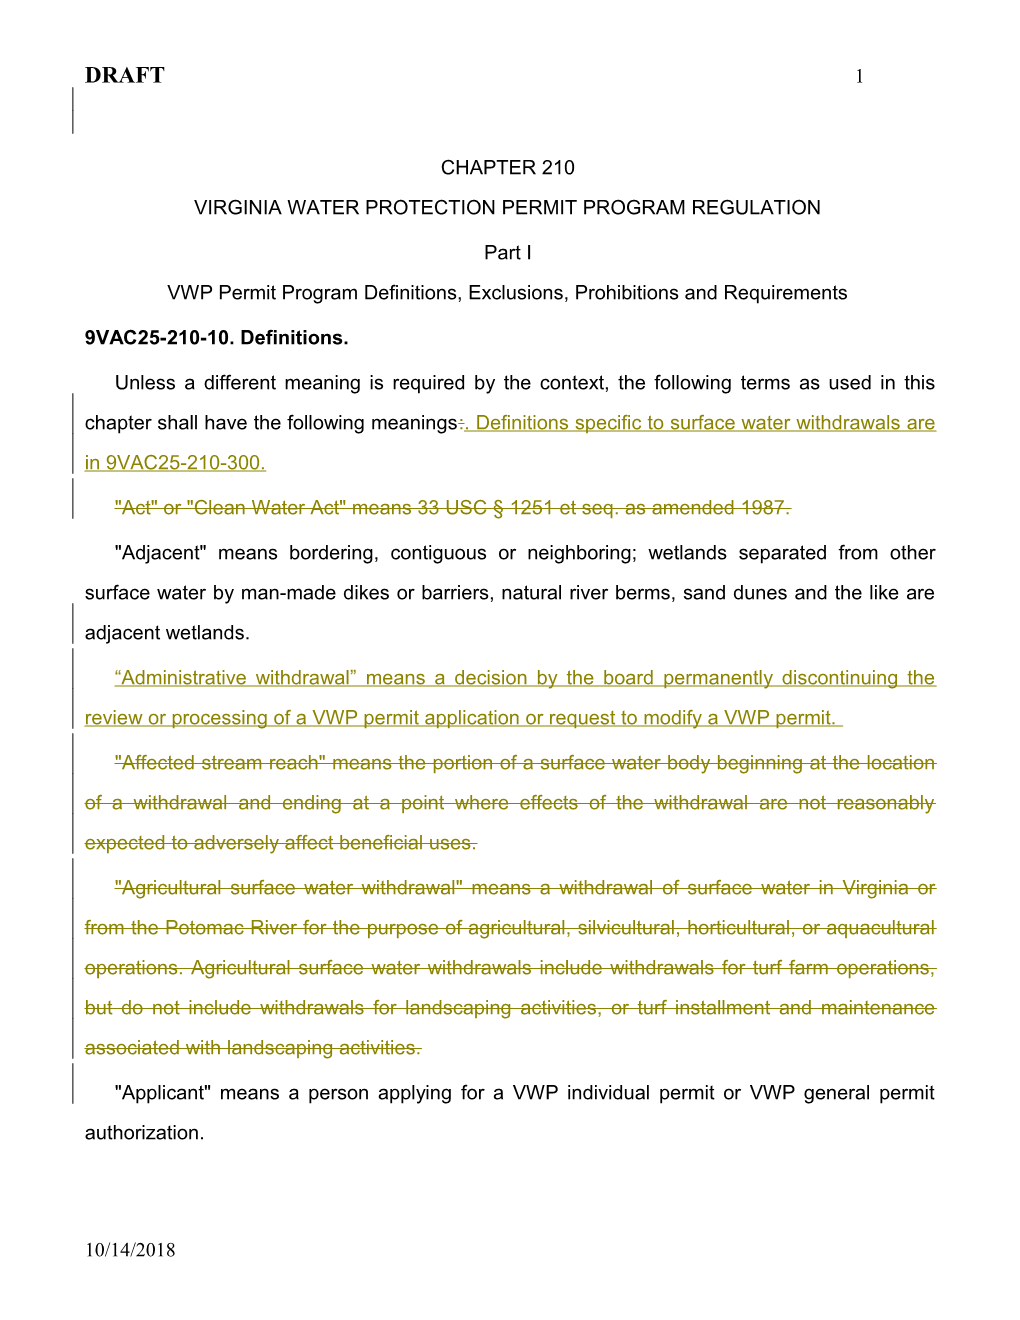 Chapter 210 Virginia Water Protection Permit Program Regulation